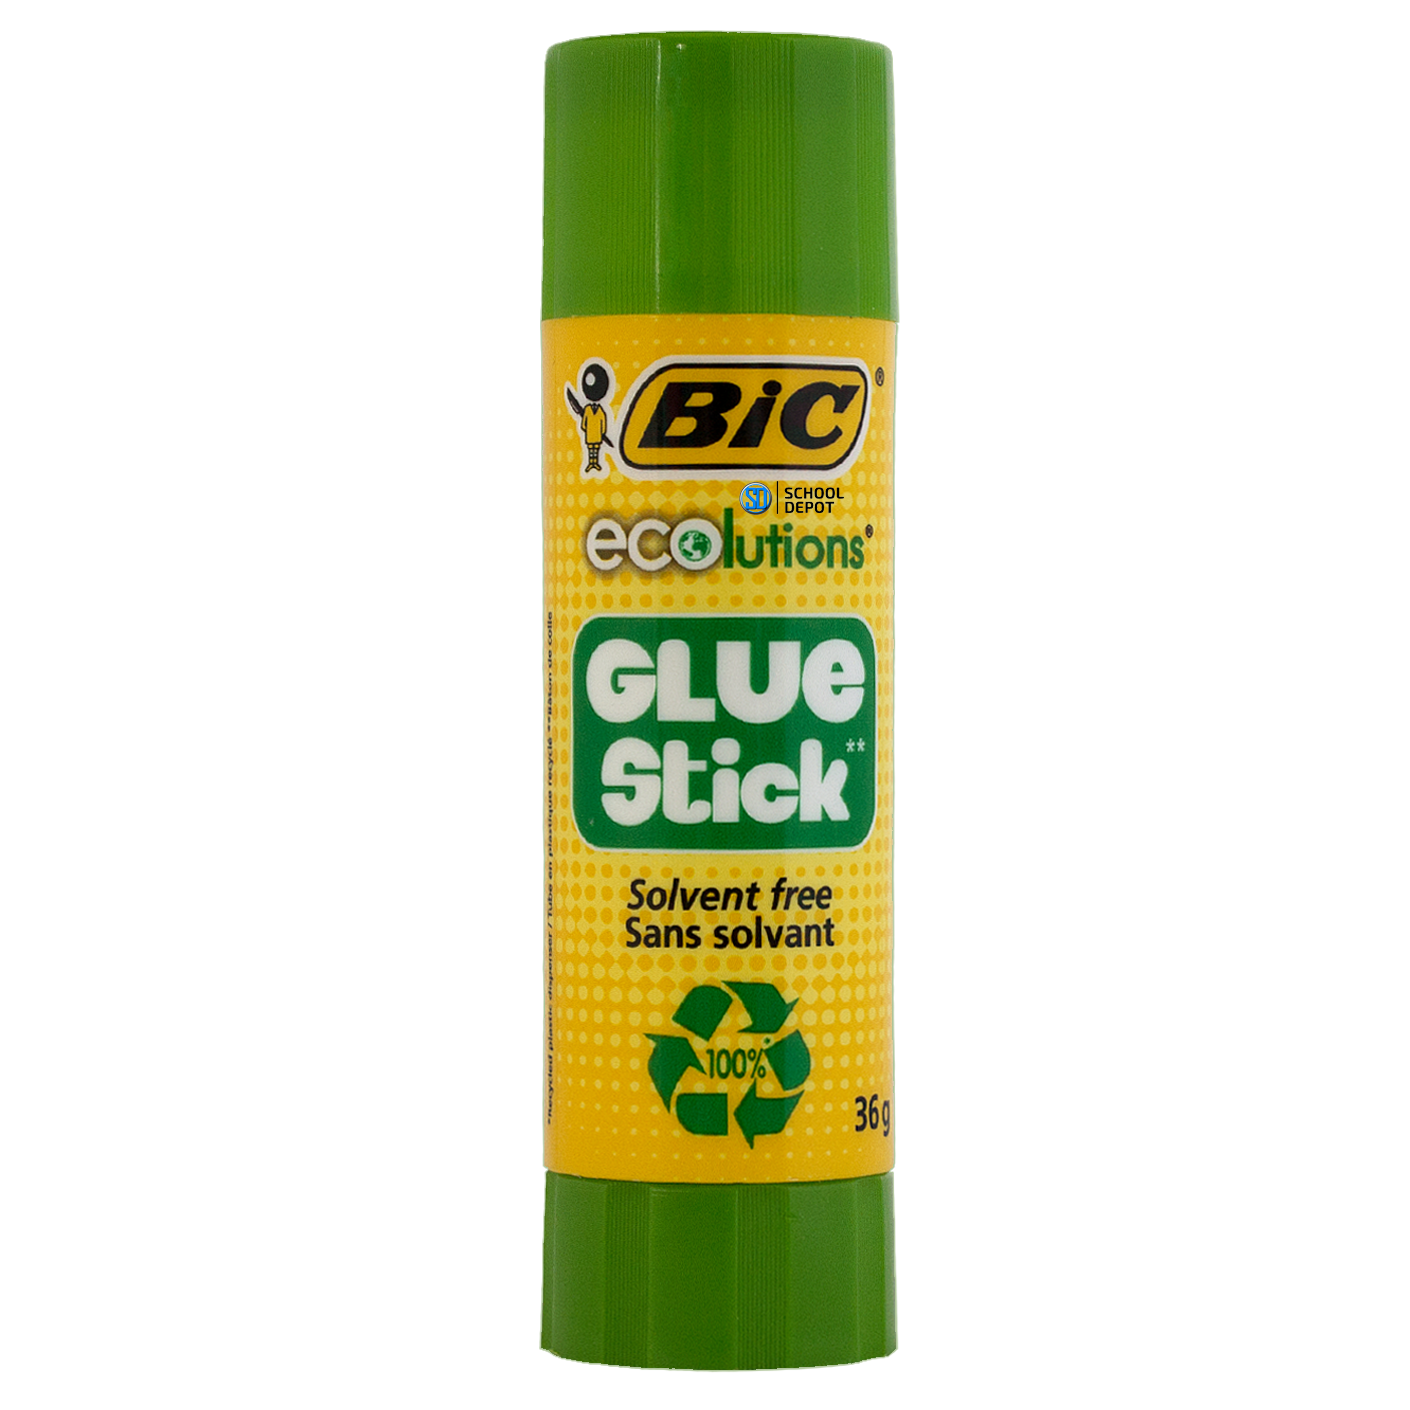 BIC Glue Stick Ecolutions 36g Jumbo